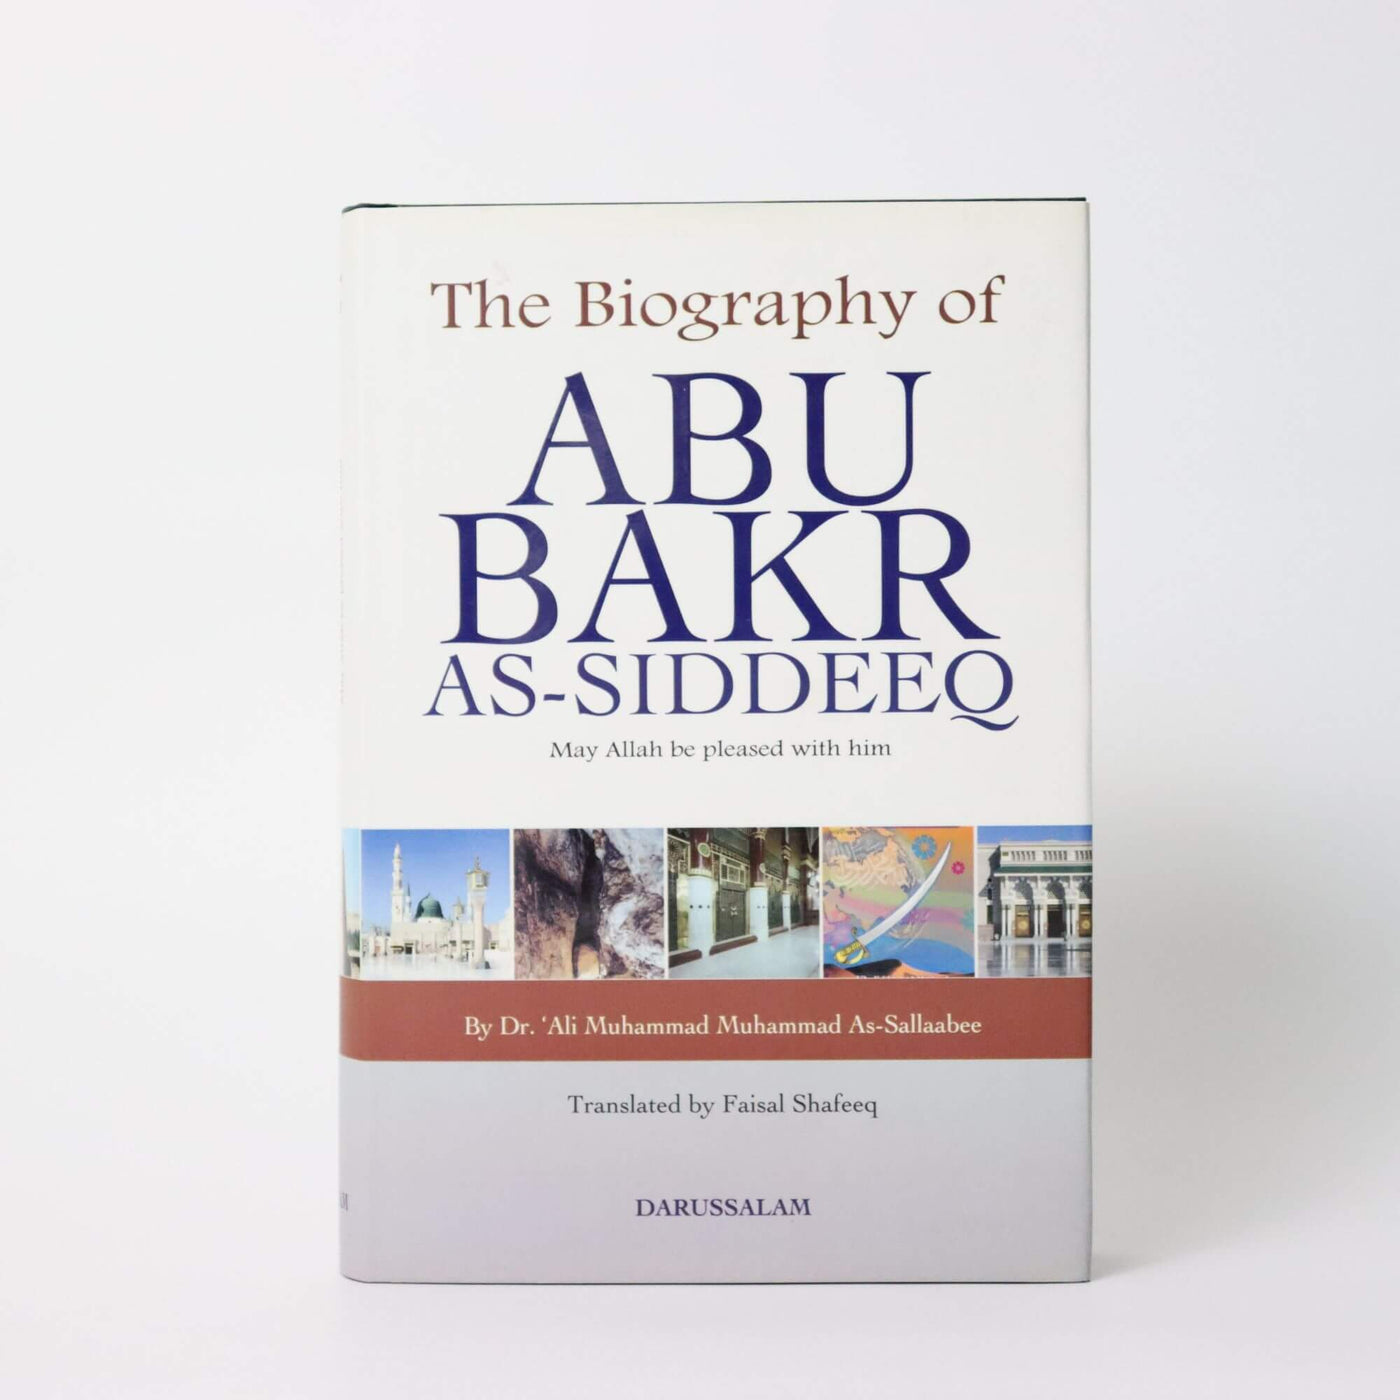 The Biography of Abu Bakr as-Siddeeq